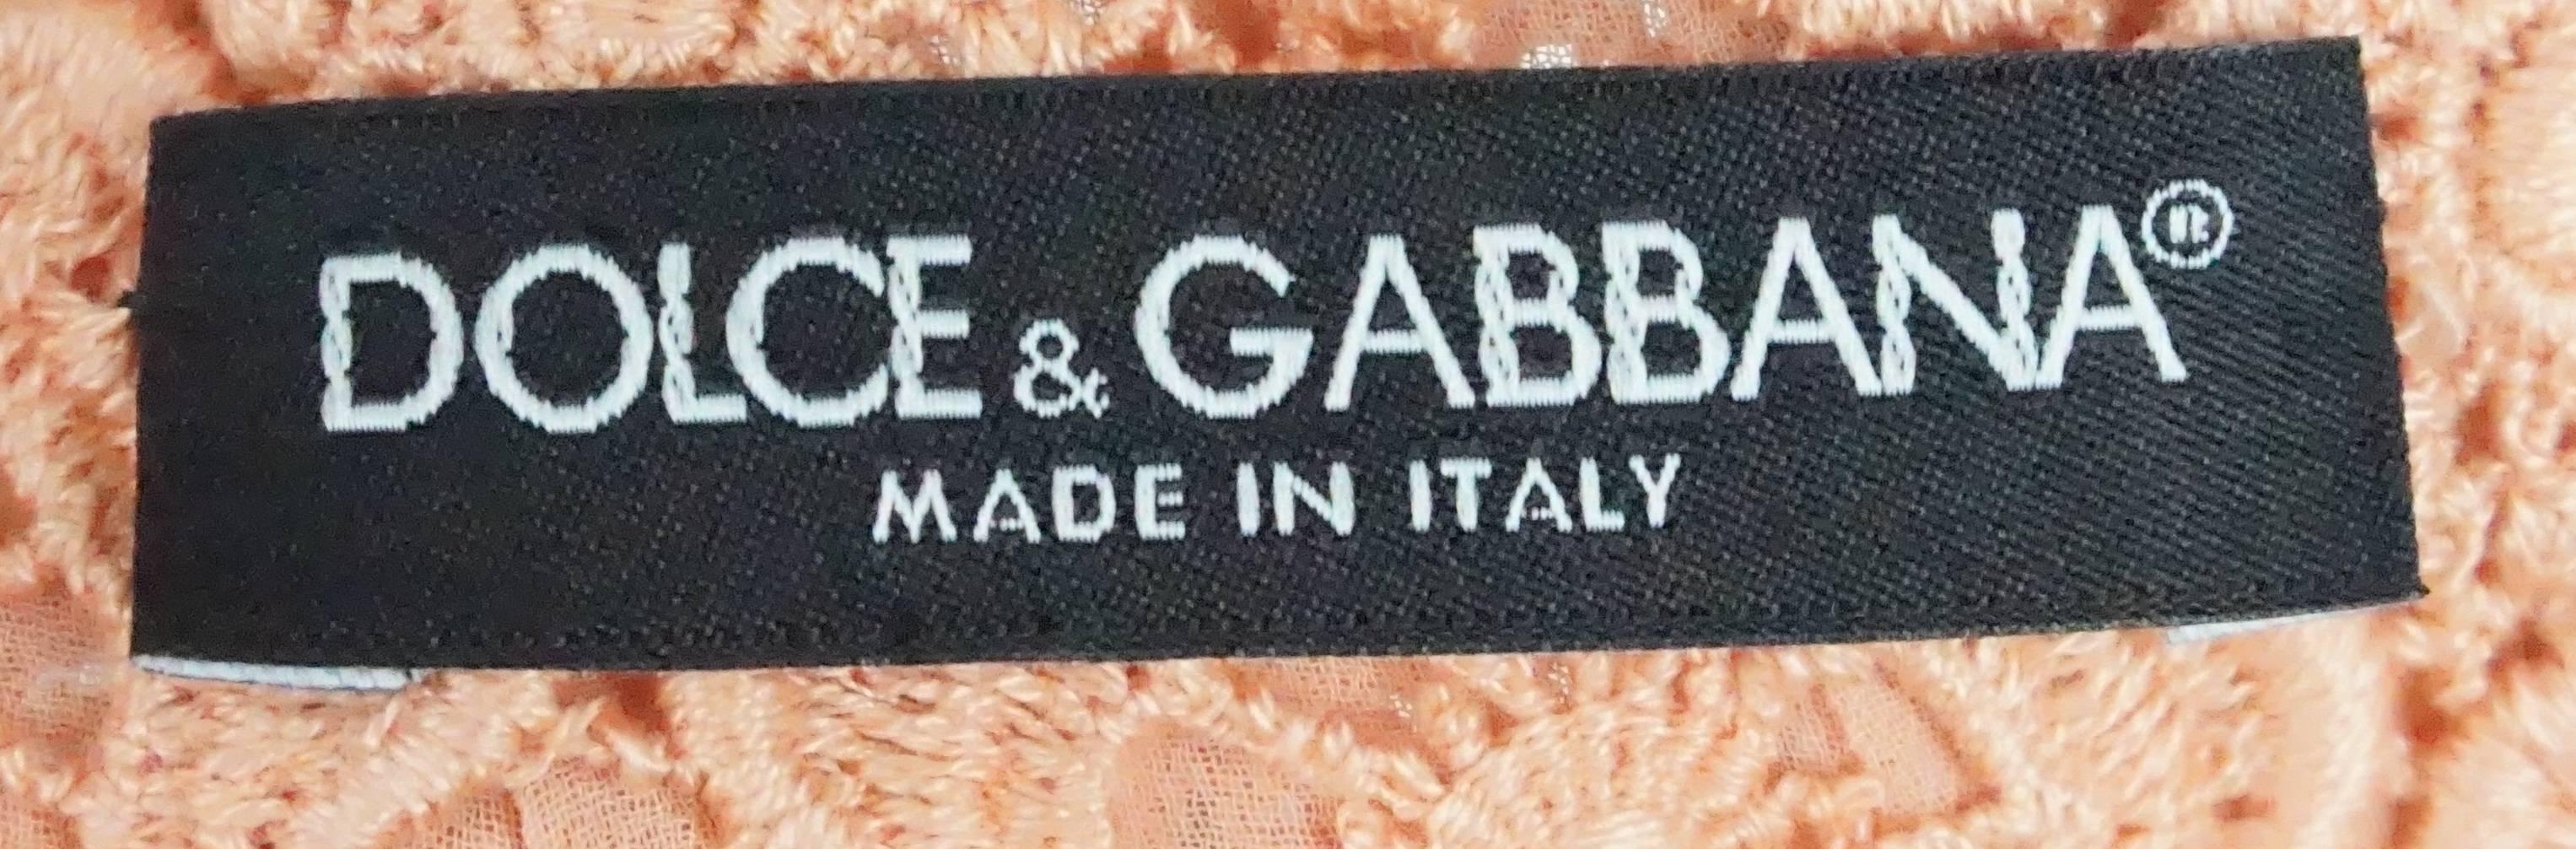 Dolce & Gabbana Coral Lace Skirt Suit   1